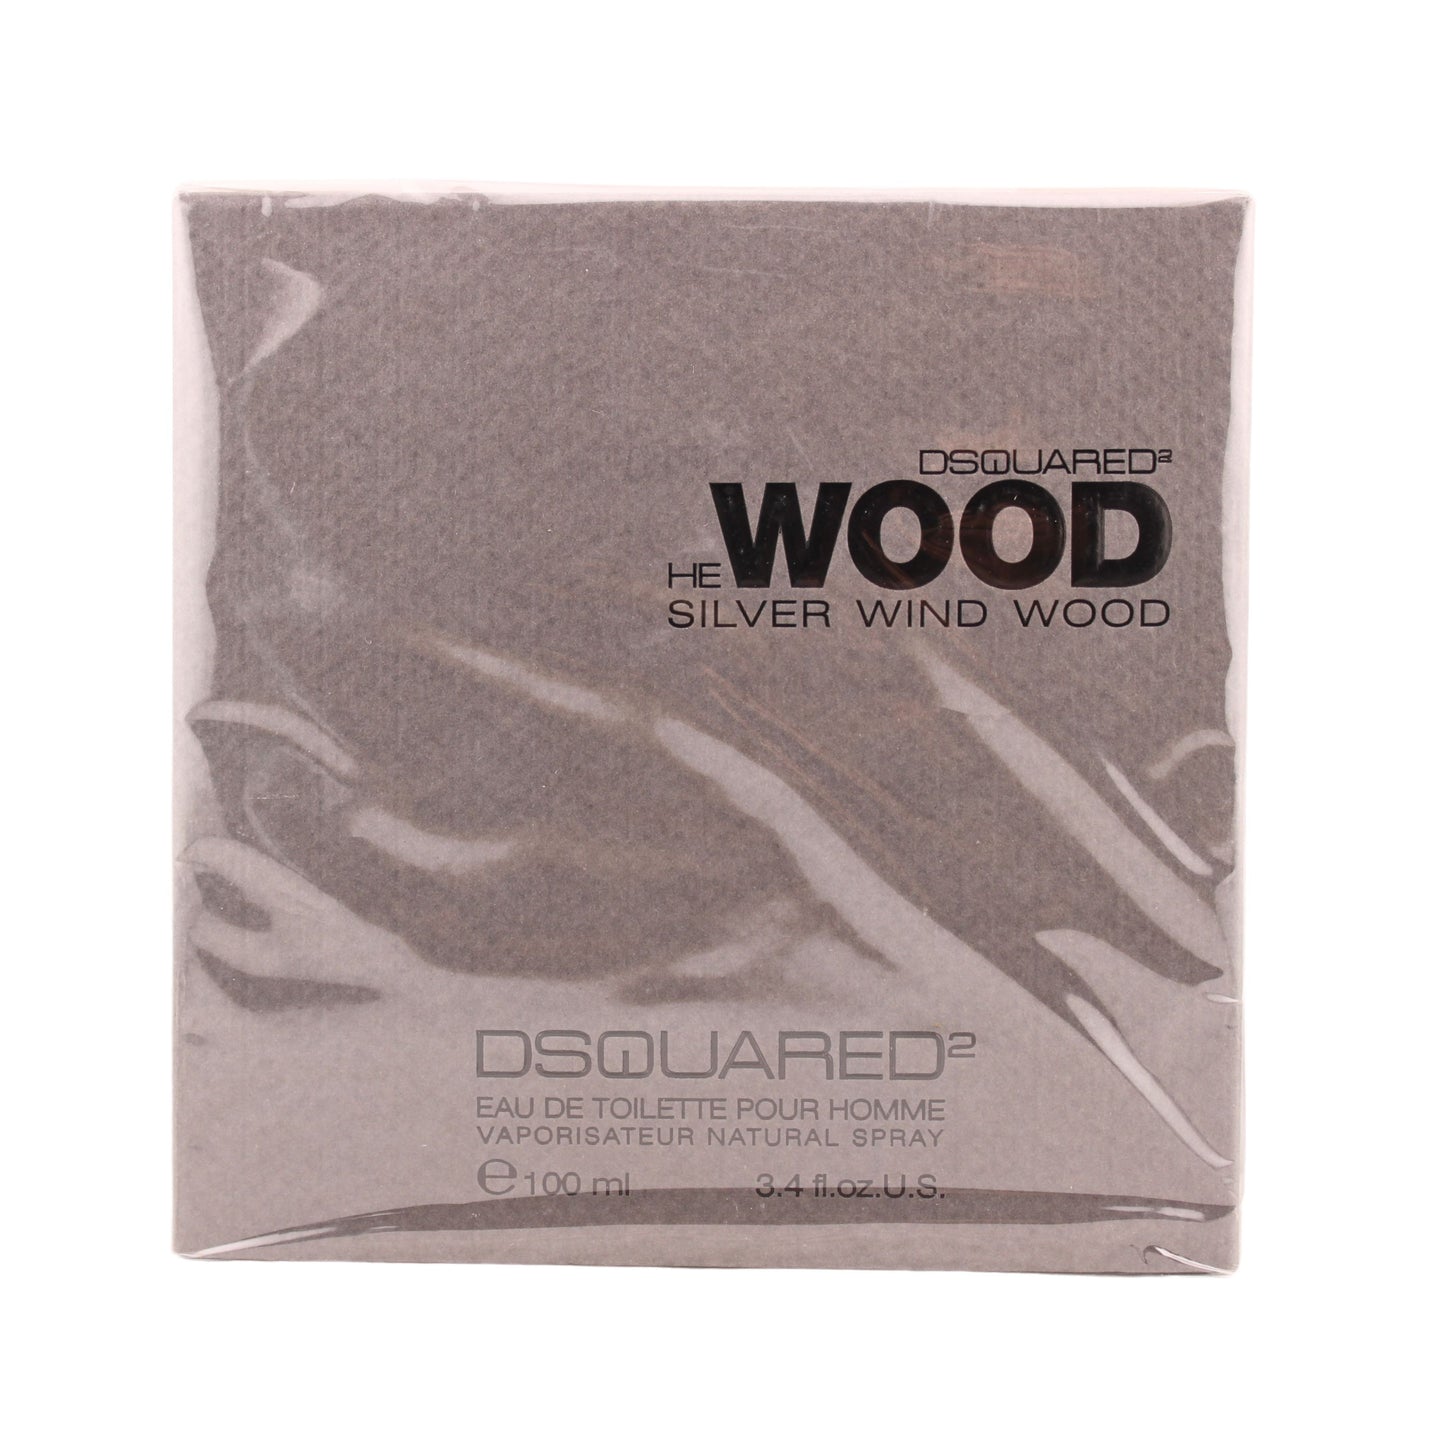 Dsquared2 He Wood Silver Wind Wood Eau de Toilette for Men